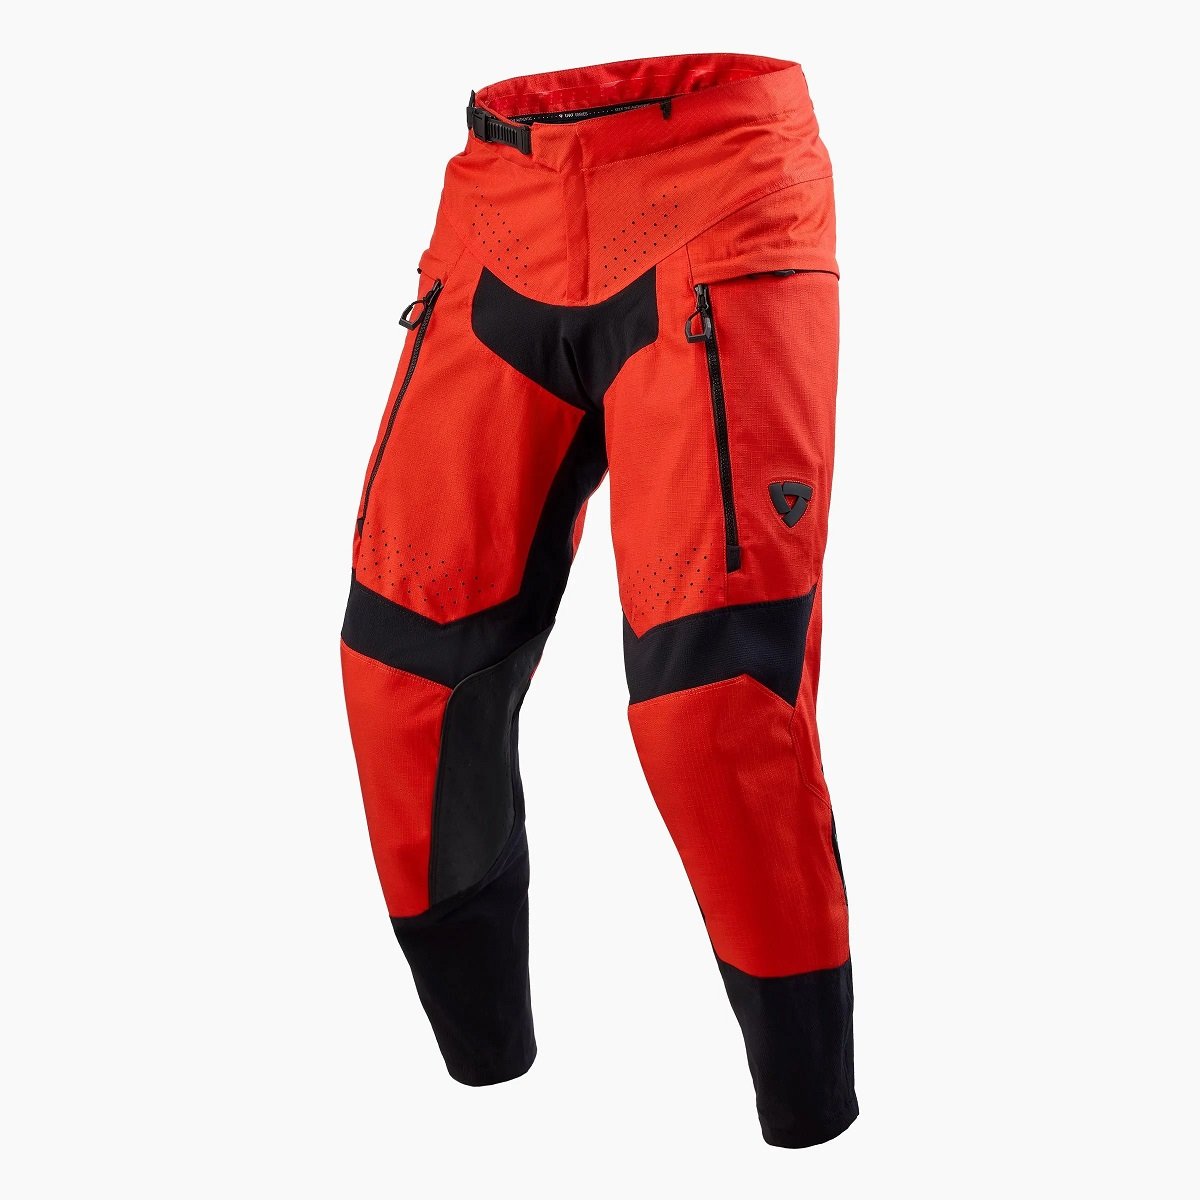 Image of REV'IT! Peninsula Trousers Red Motorcycle Pants Size XL EN